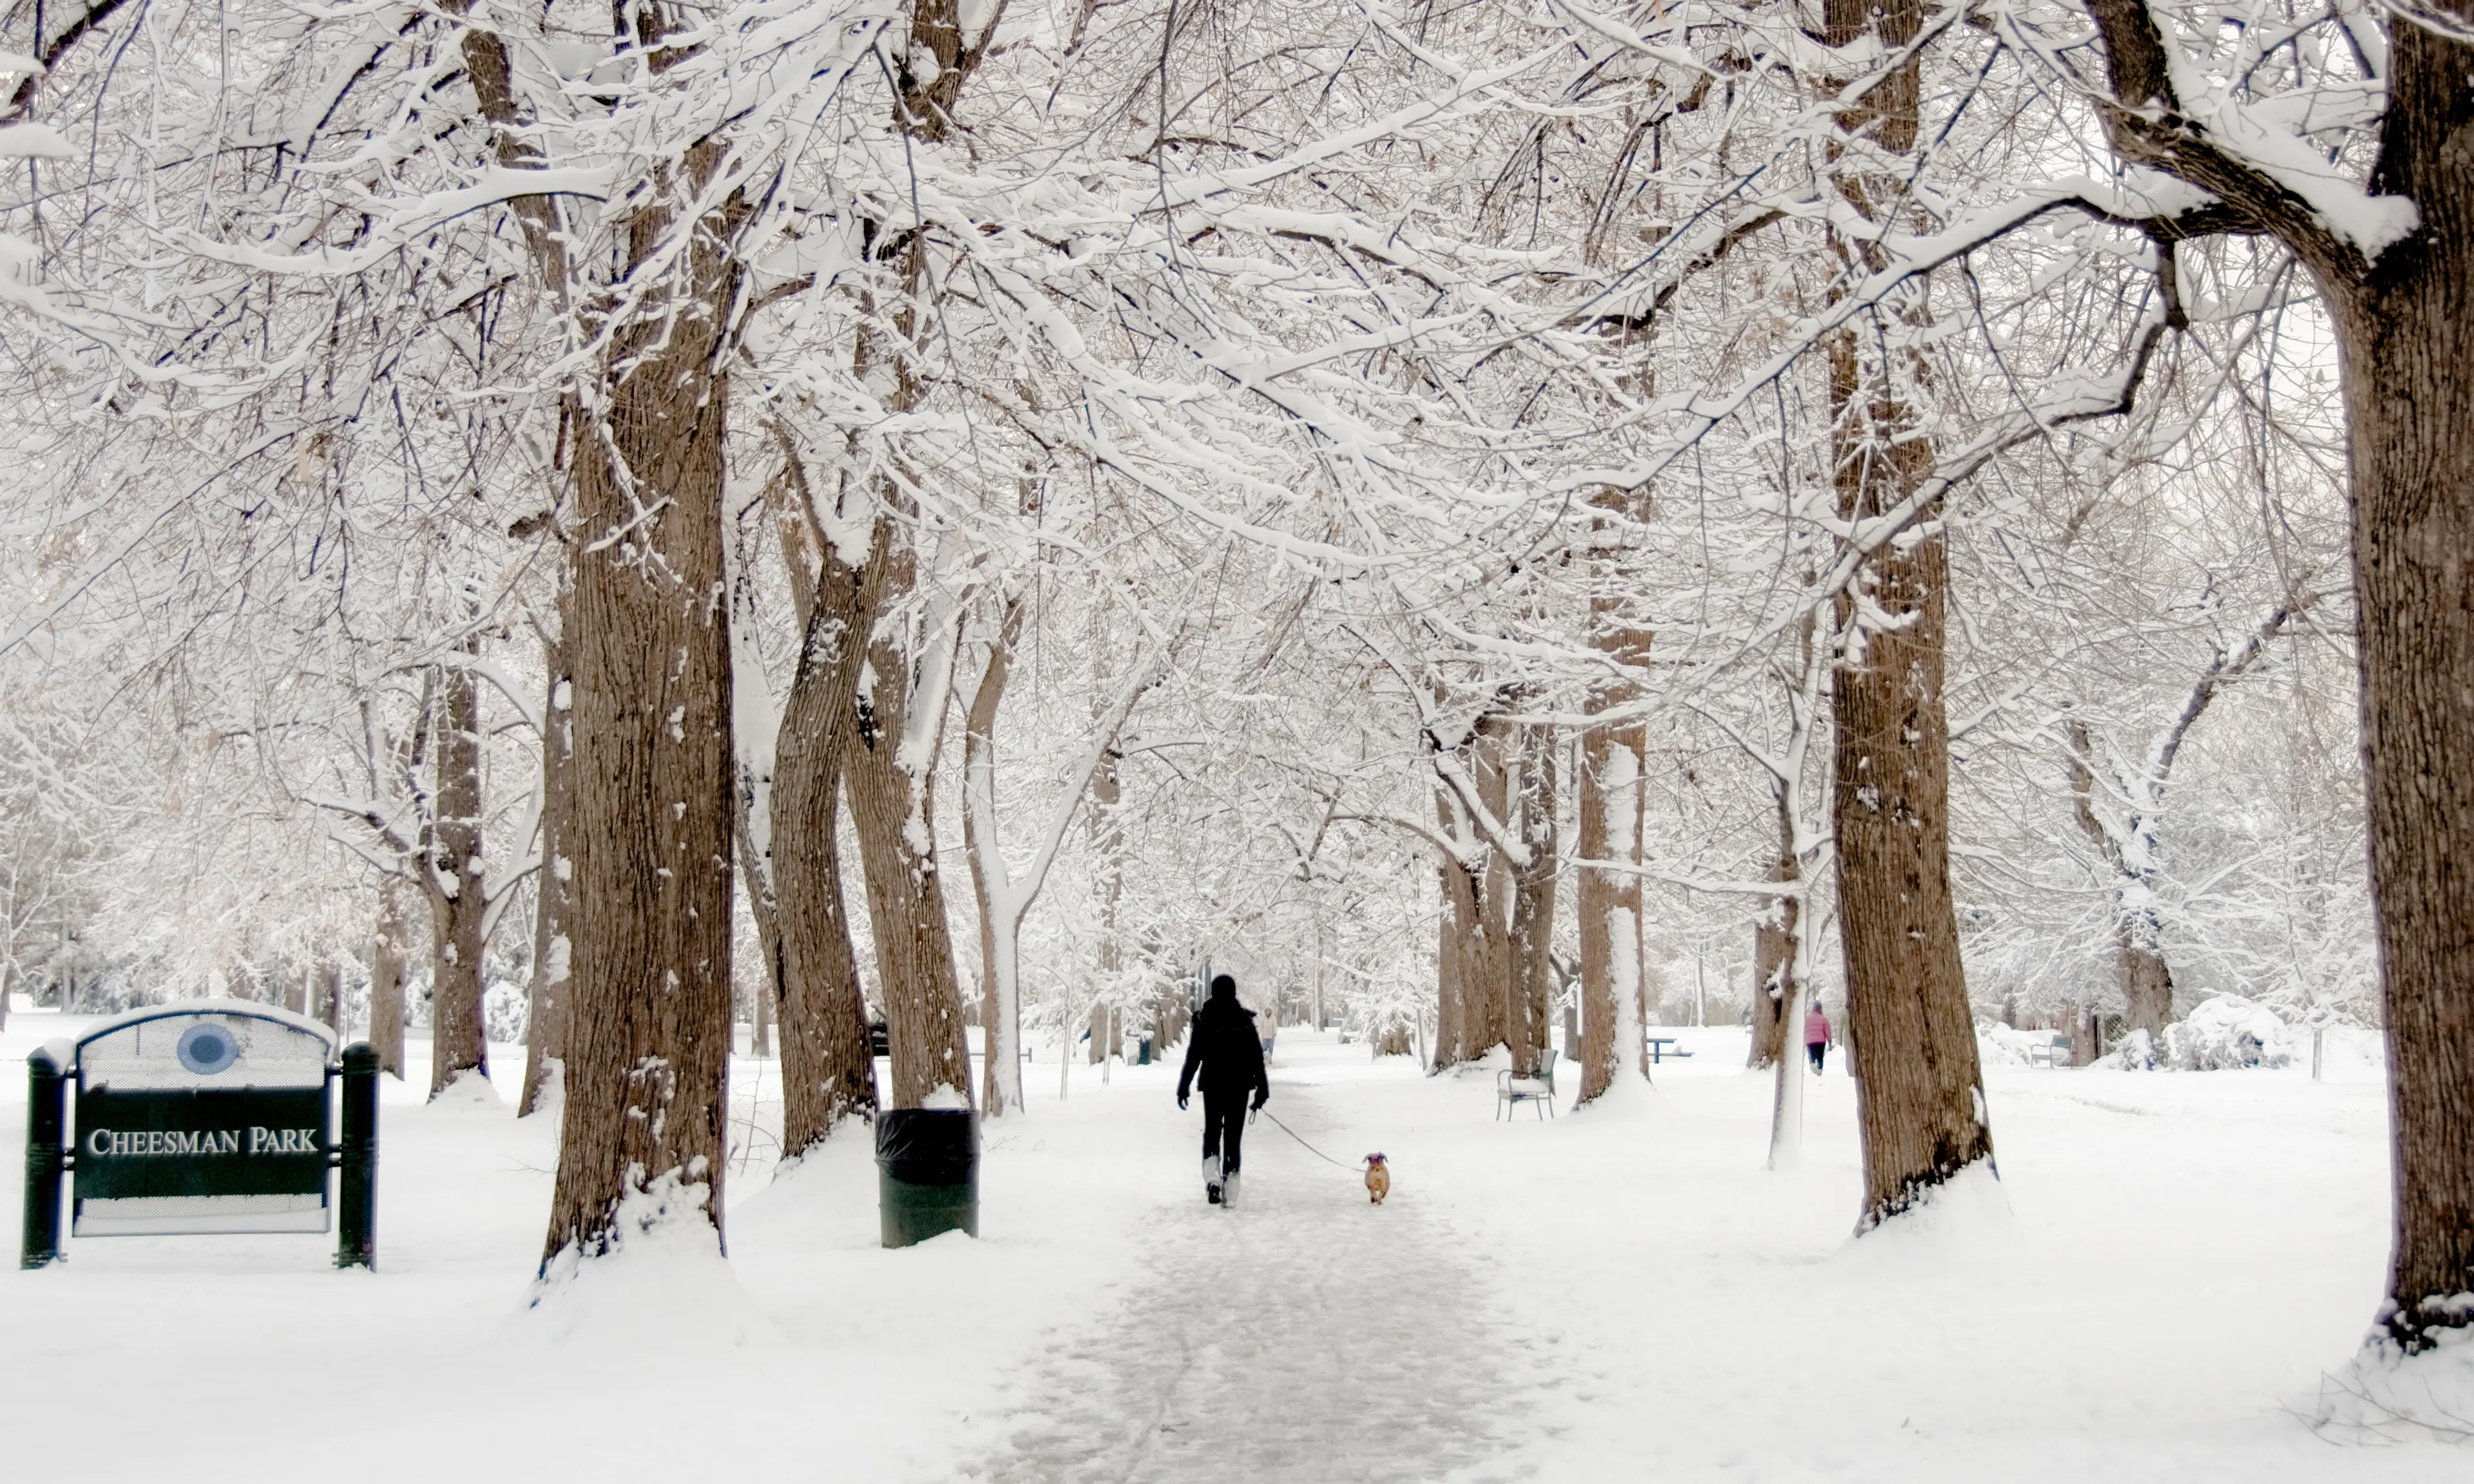 Cheesman Park in the winter